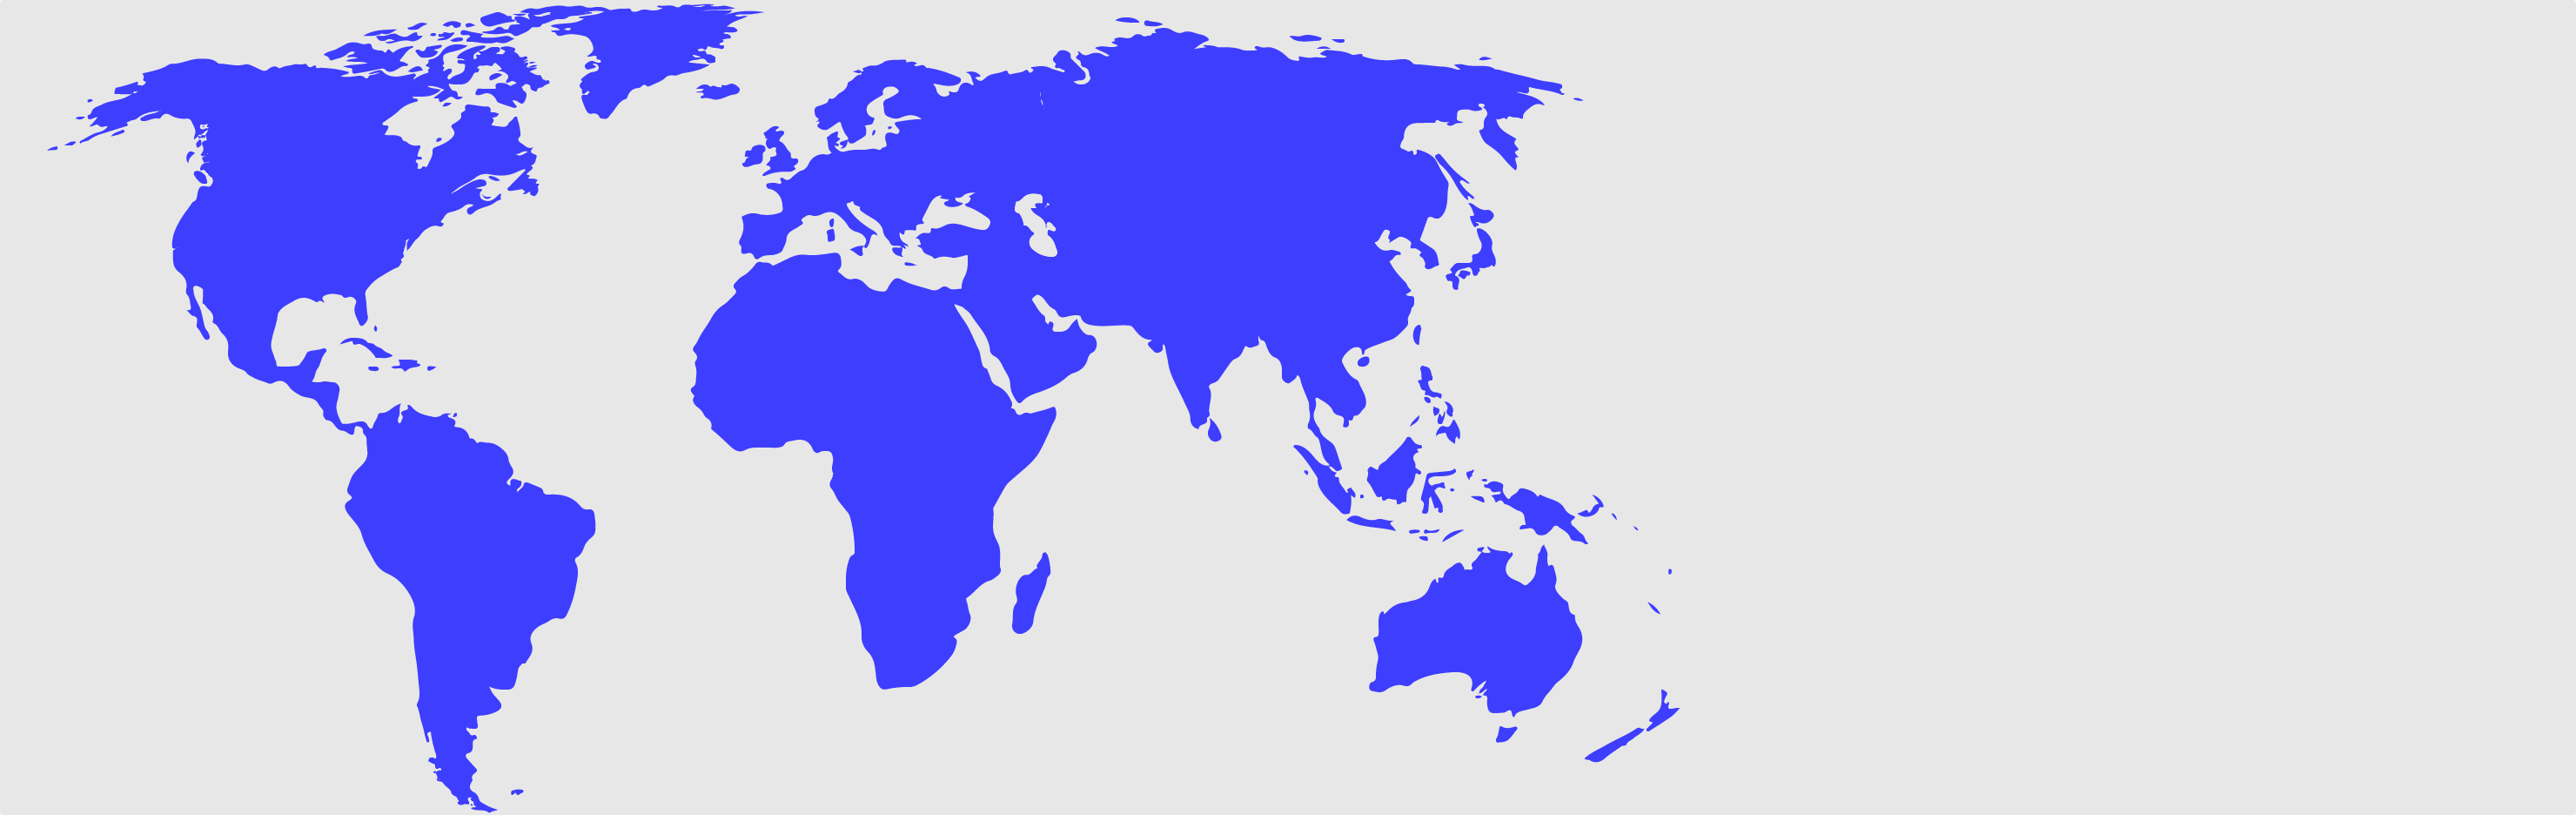 Interactive World Map